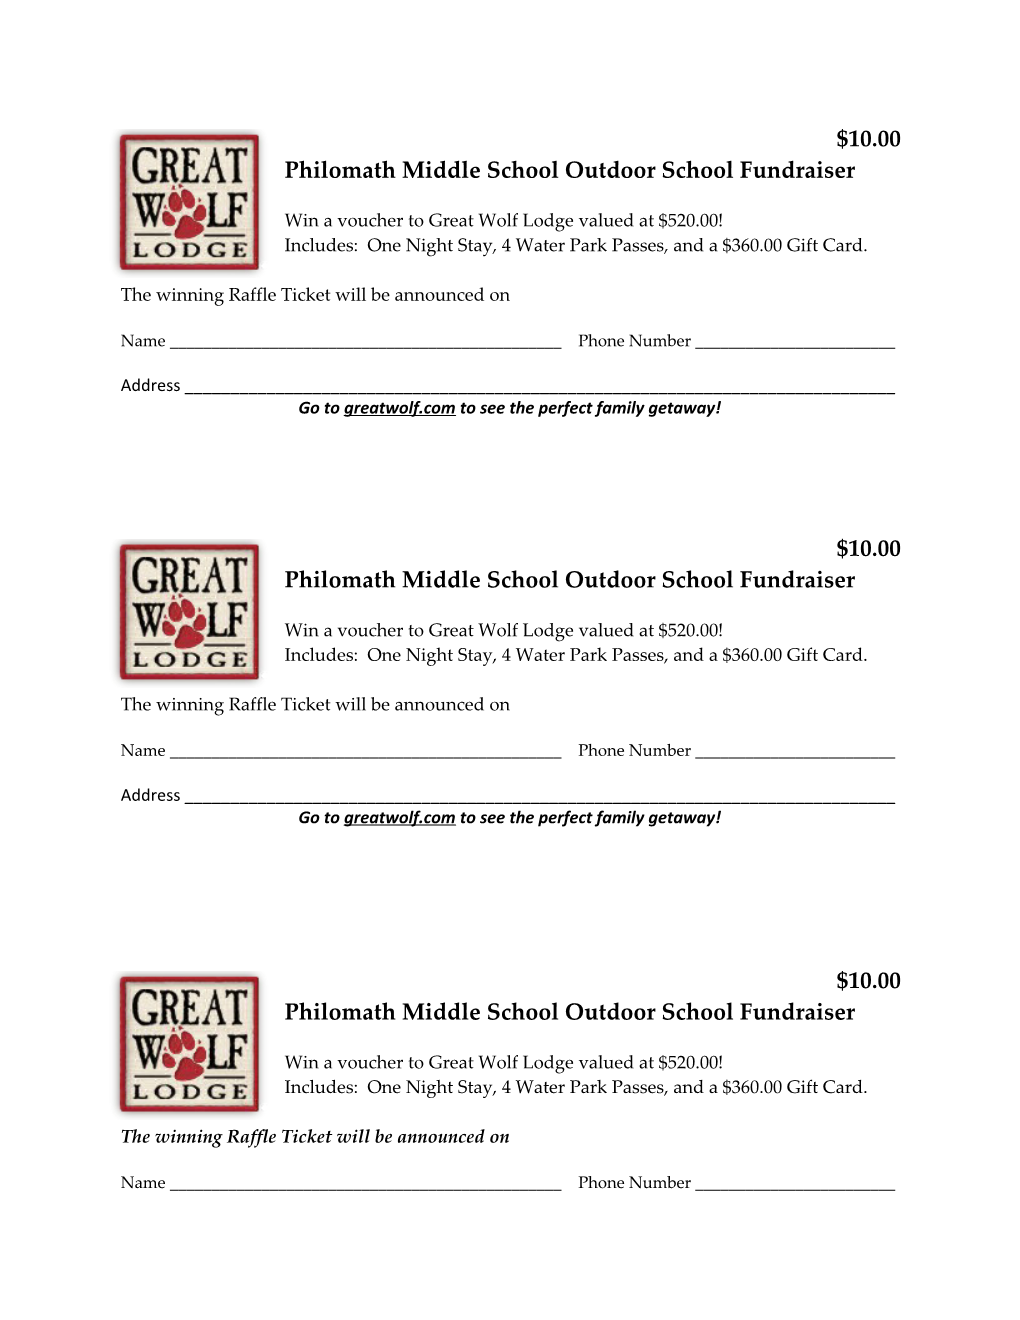 Philomath Middle School Outdoor School Fundraiser